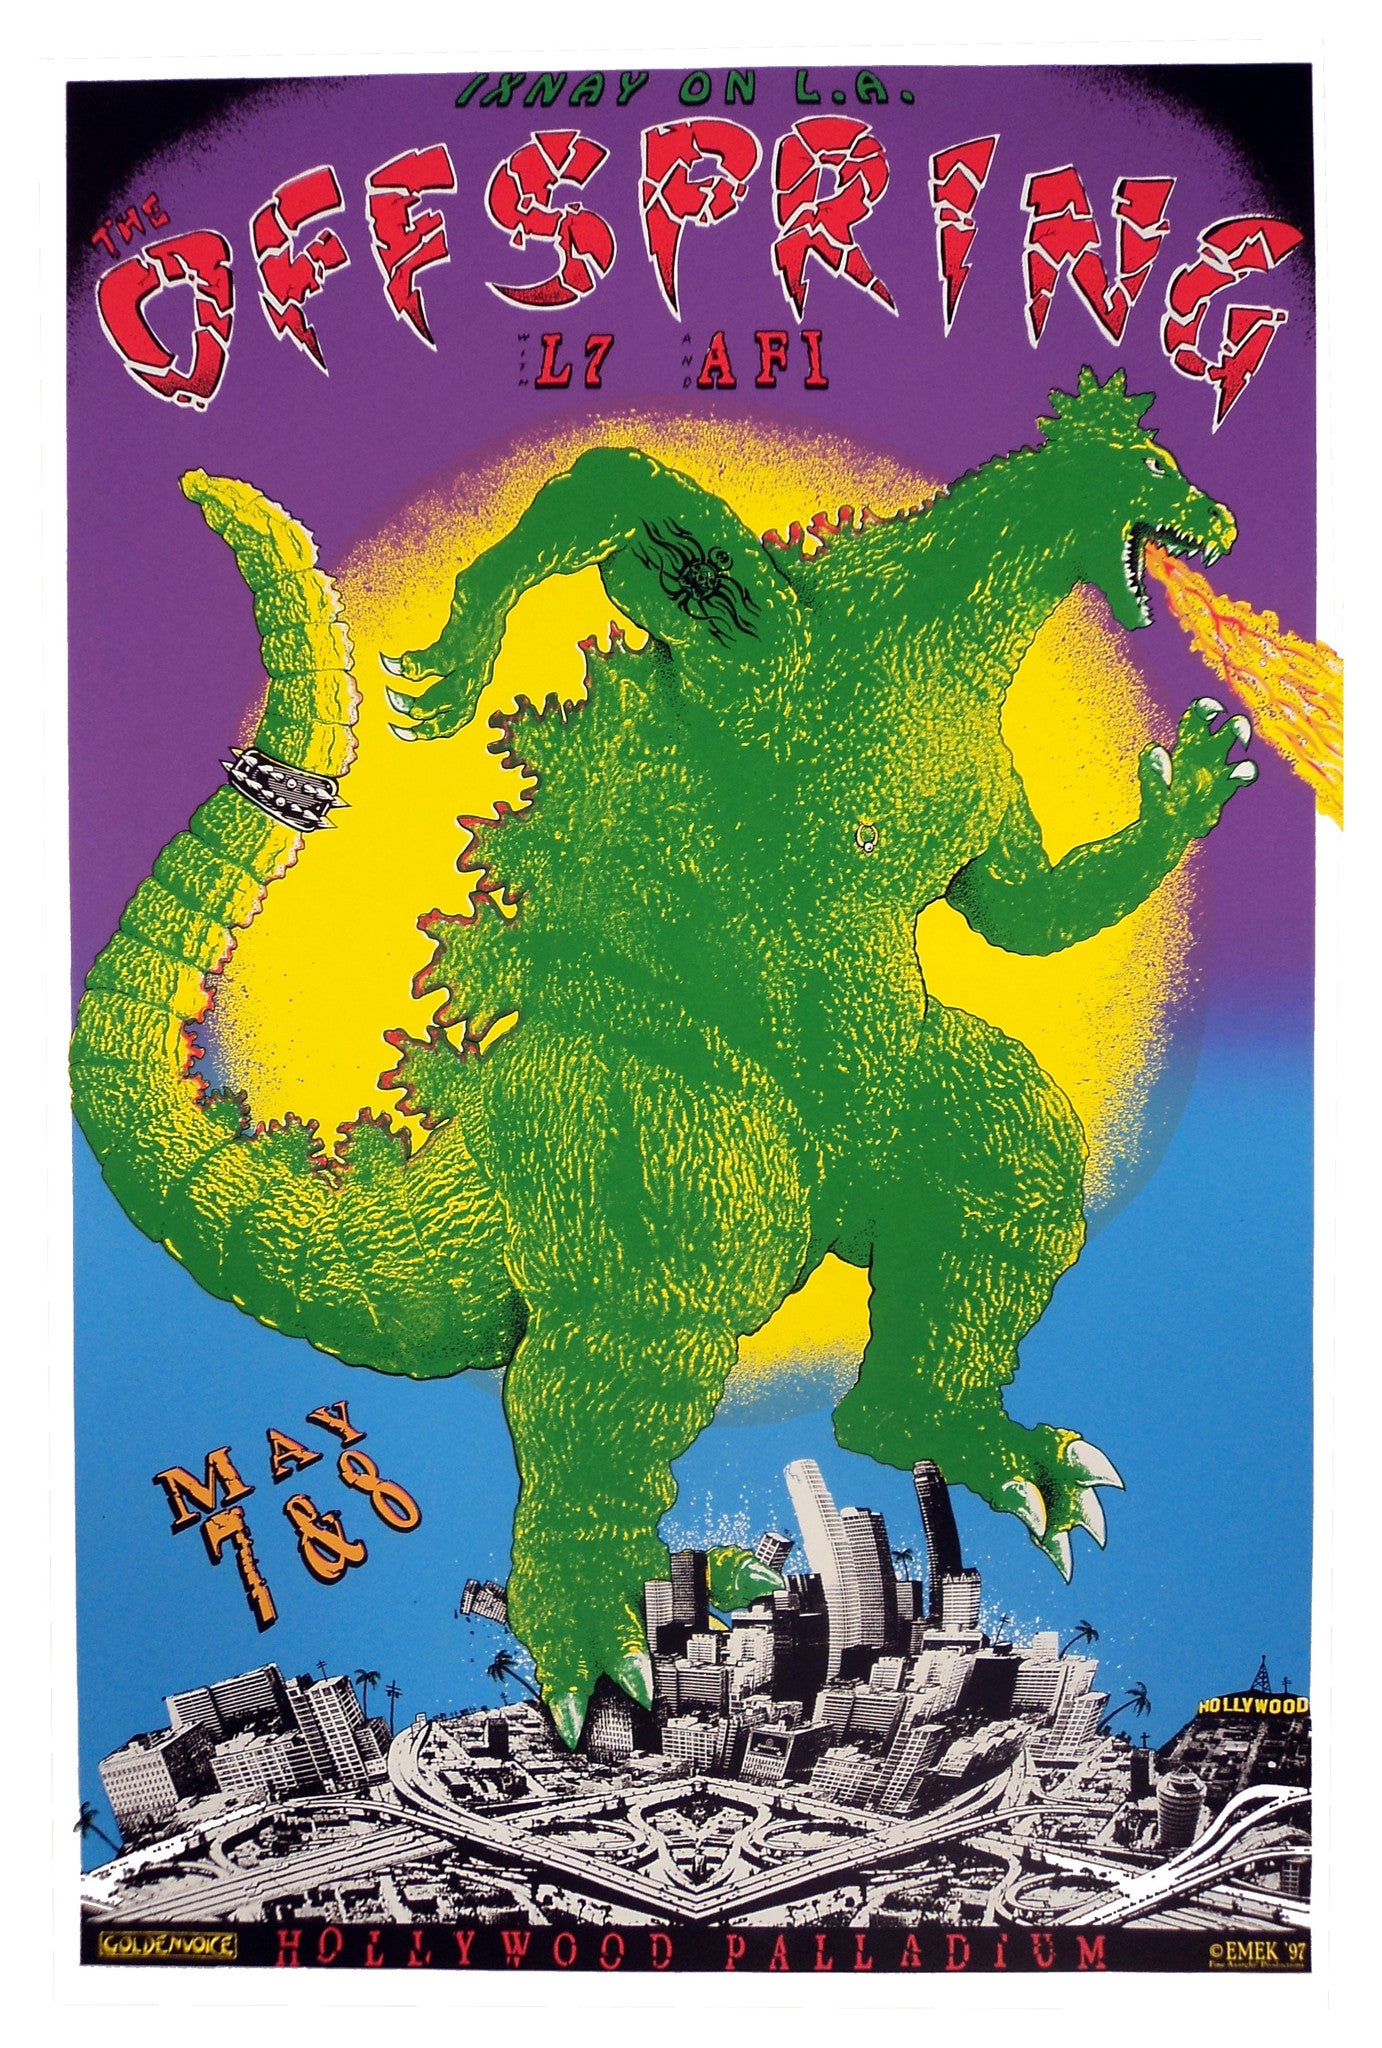 Emek - 1997 - Offspring Concert Poster